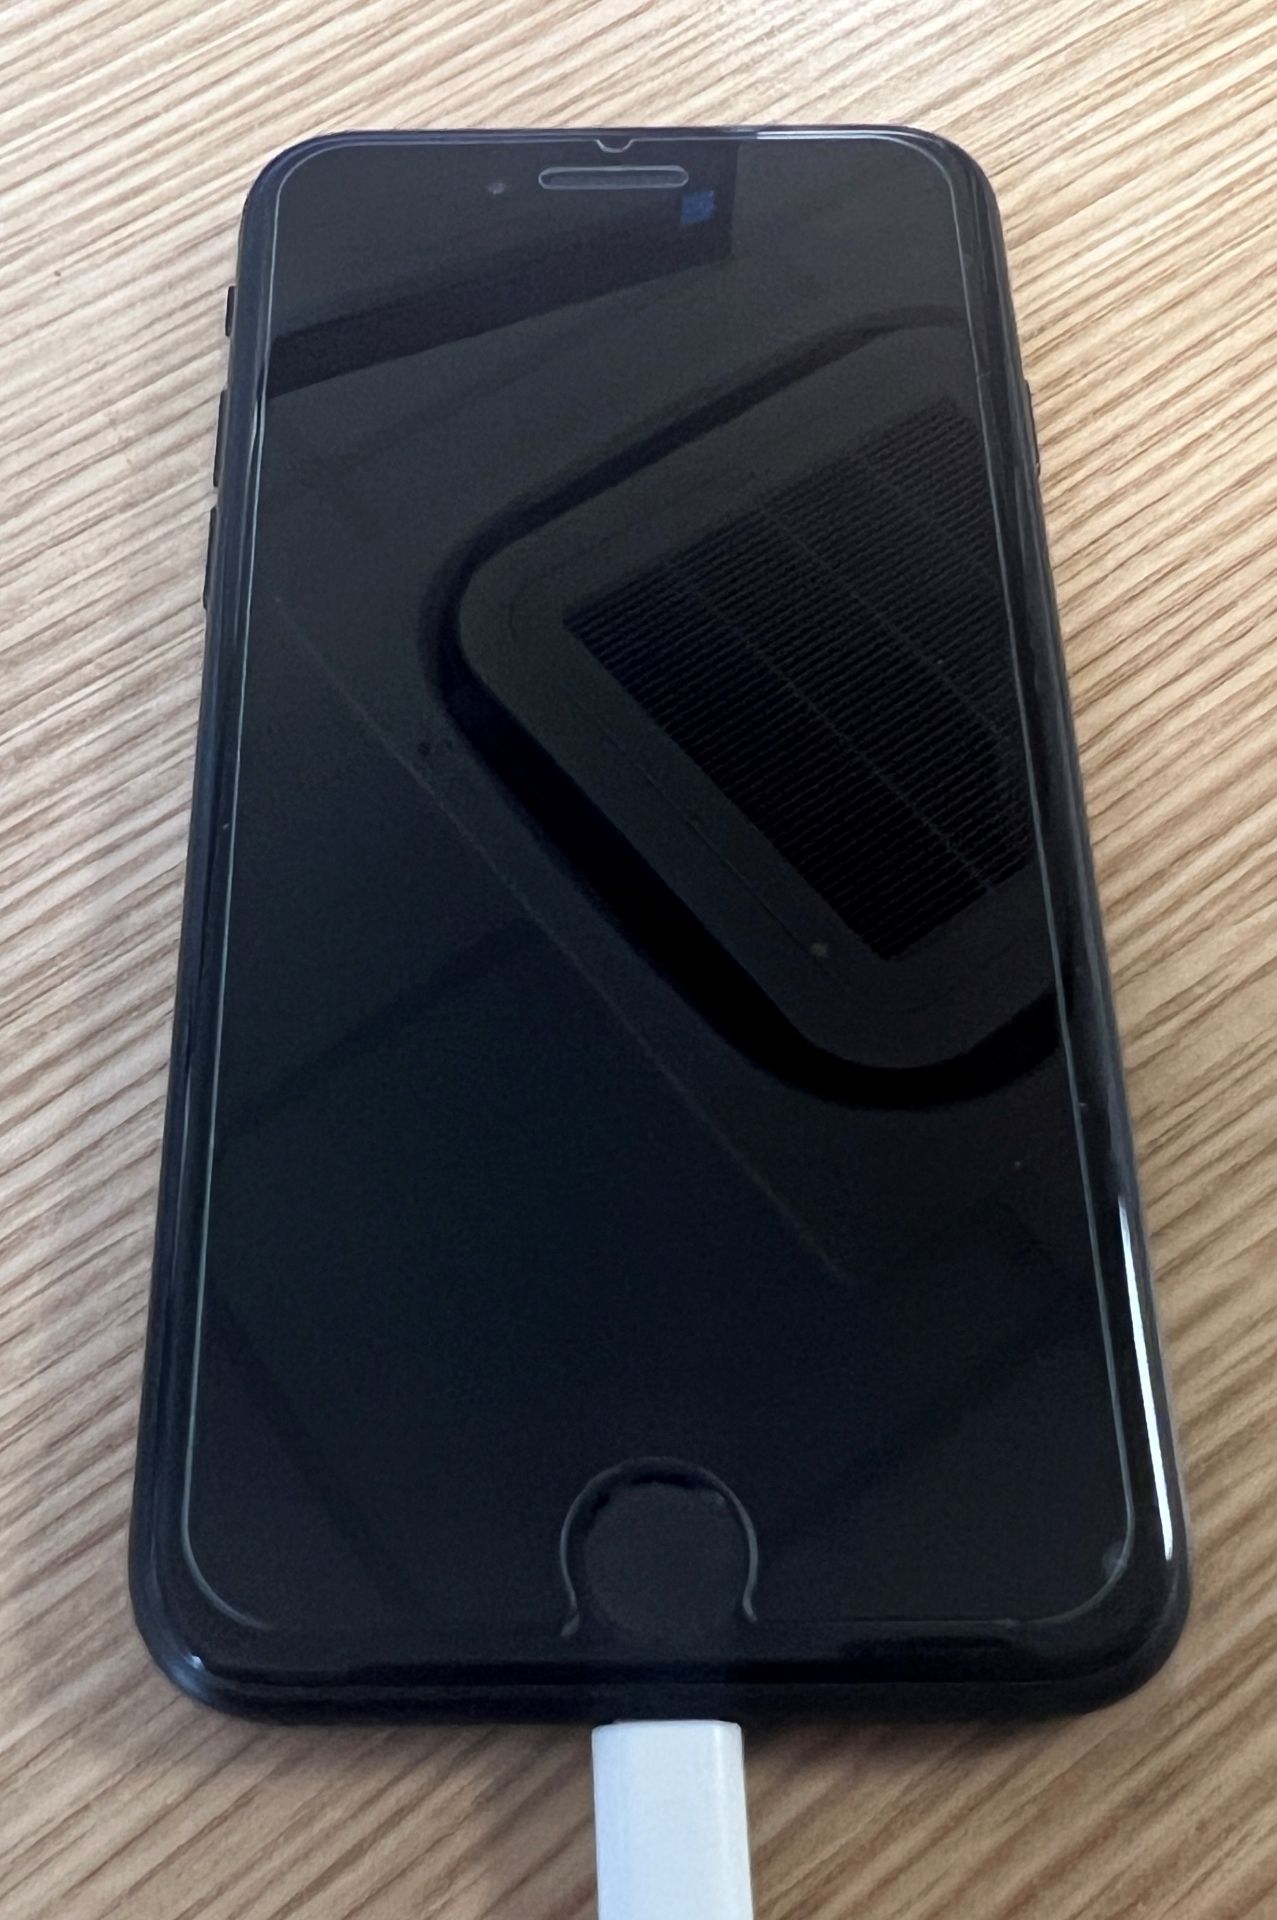 Apple iPhone SE (2020 2nd Gen) 64Gb - Black - Unlocked - Image 3 of 7